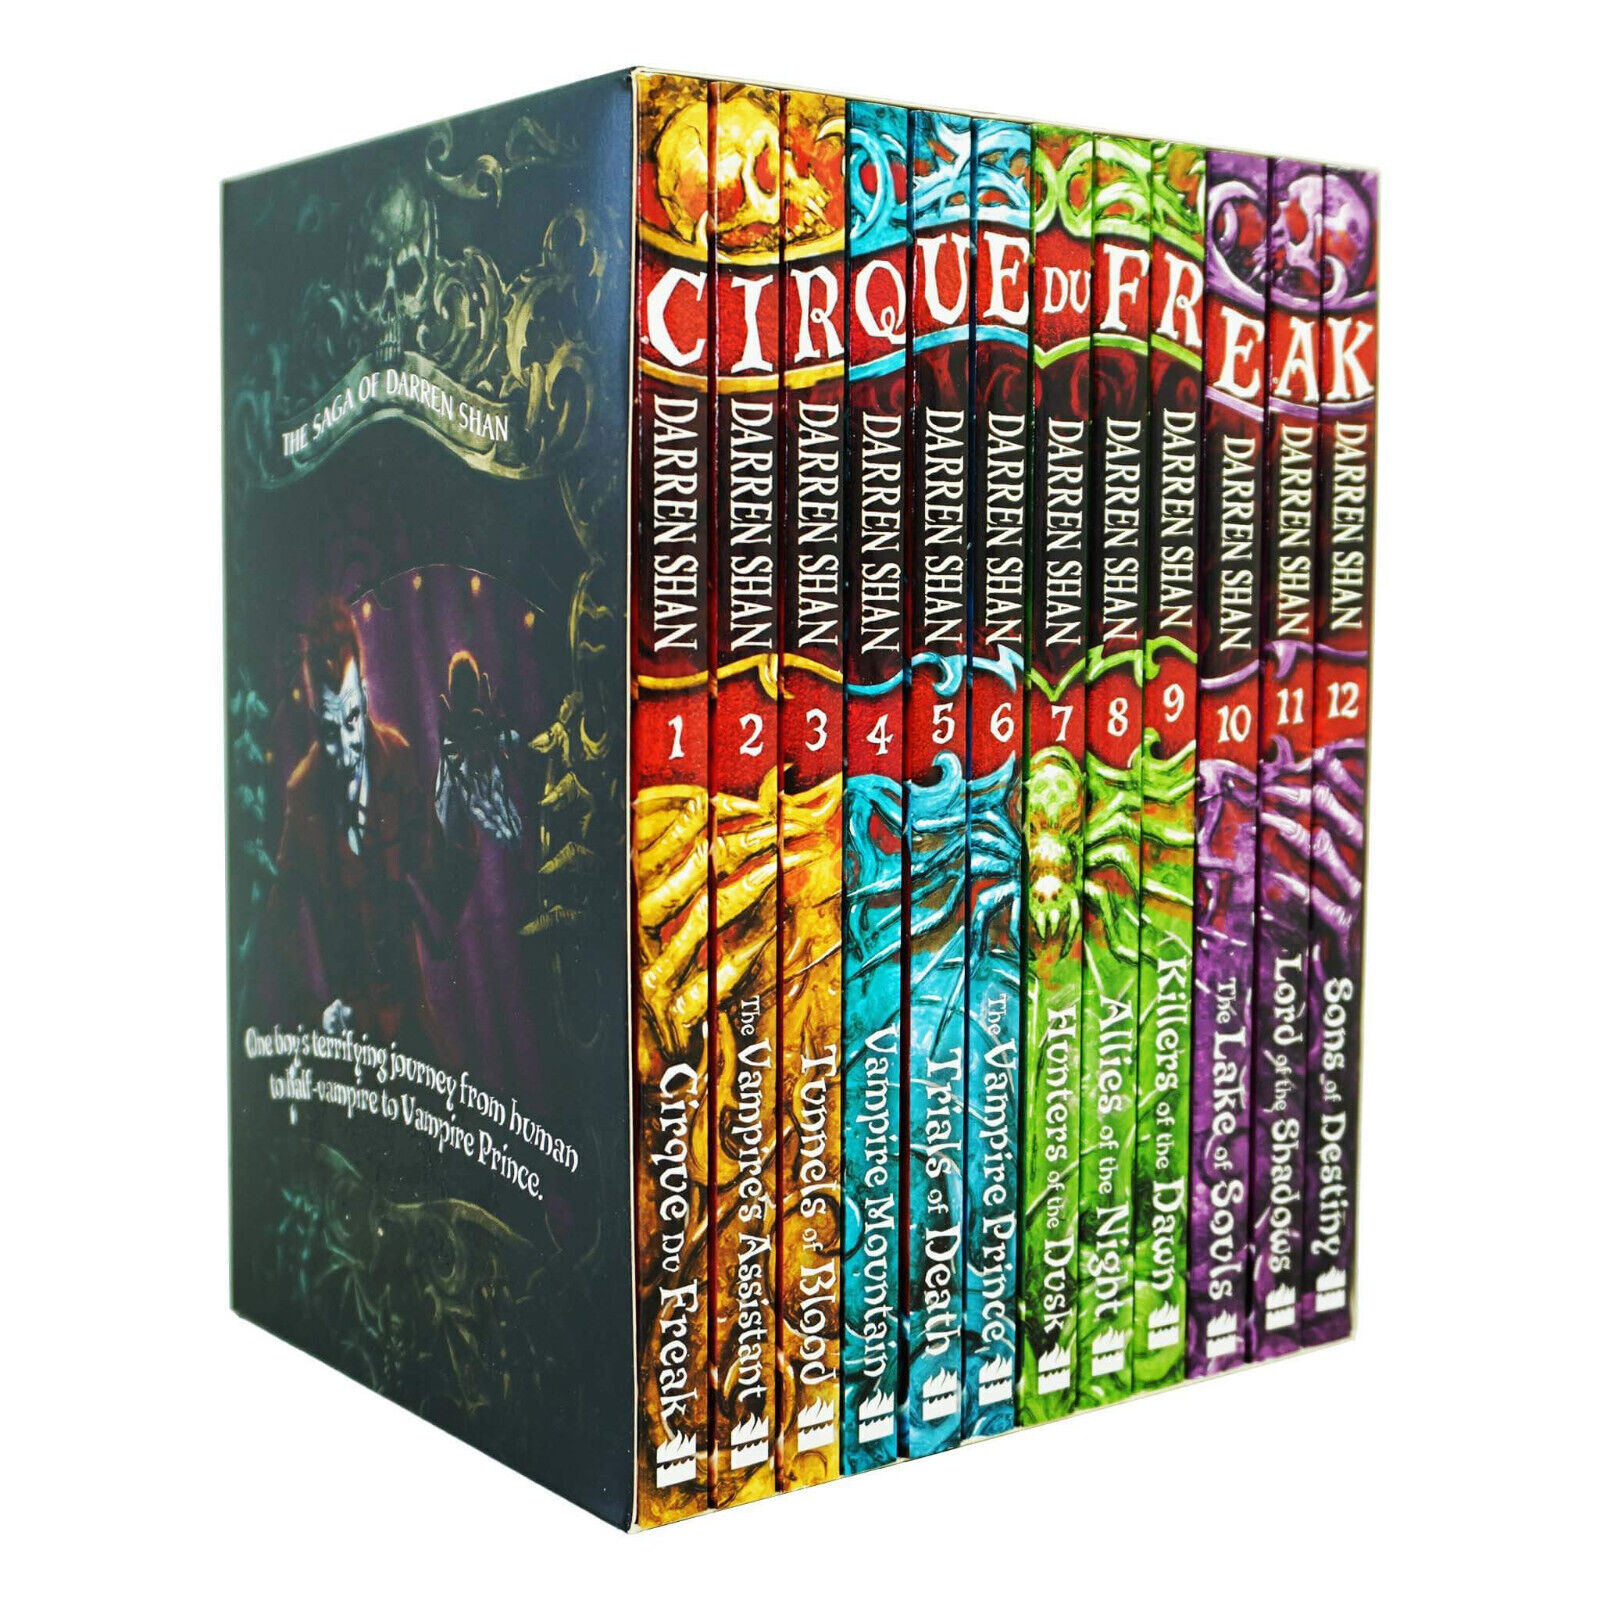 The Saga of Darren Shan Cirque du Freak By Darren Shan 12 Book Set - Ages 9-14